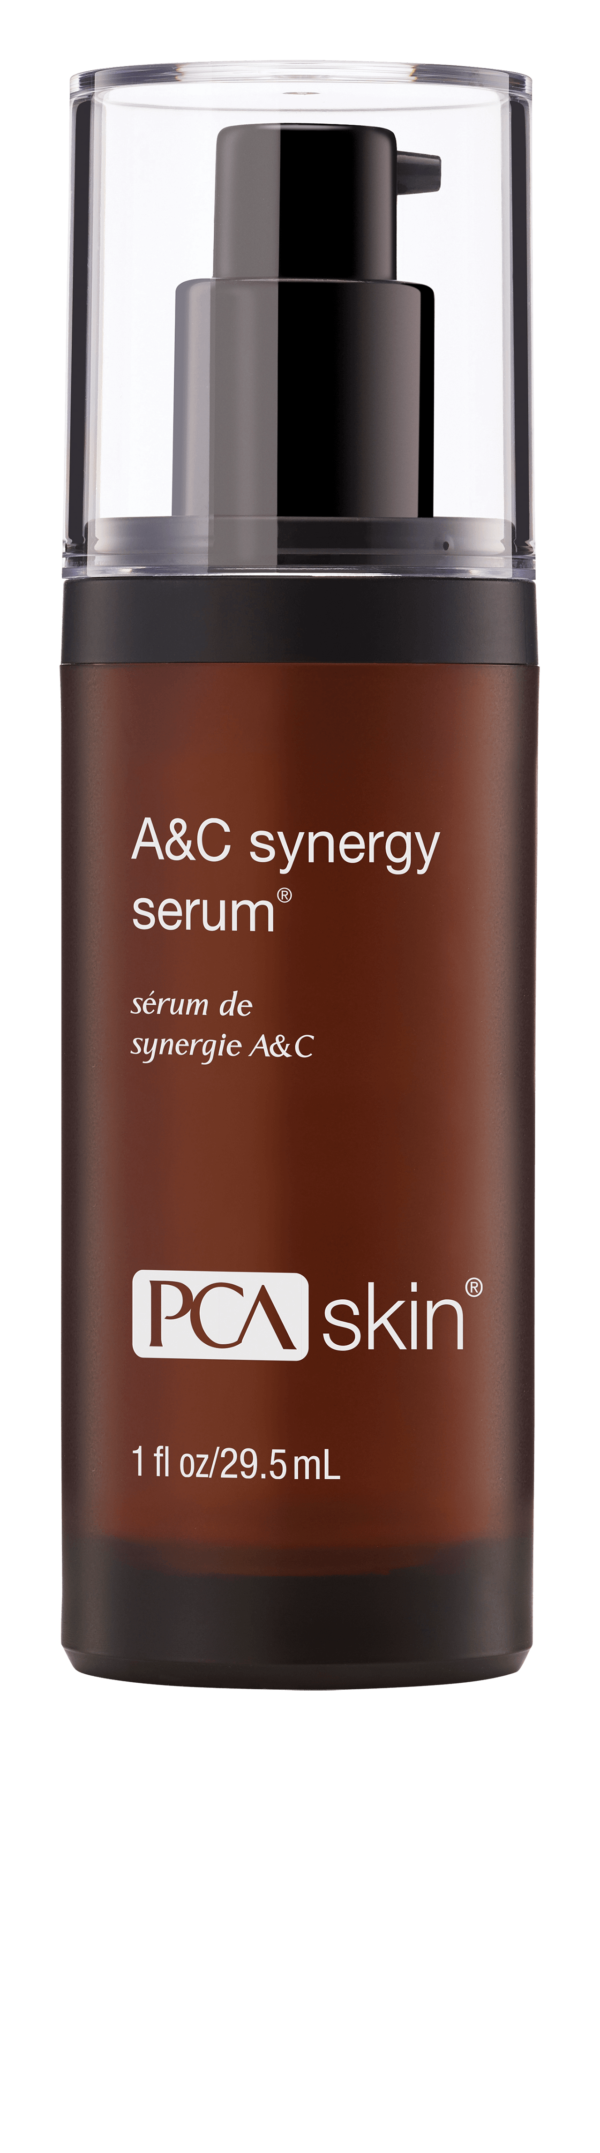 PCA_Skin_A&C_Synergy_Serum